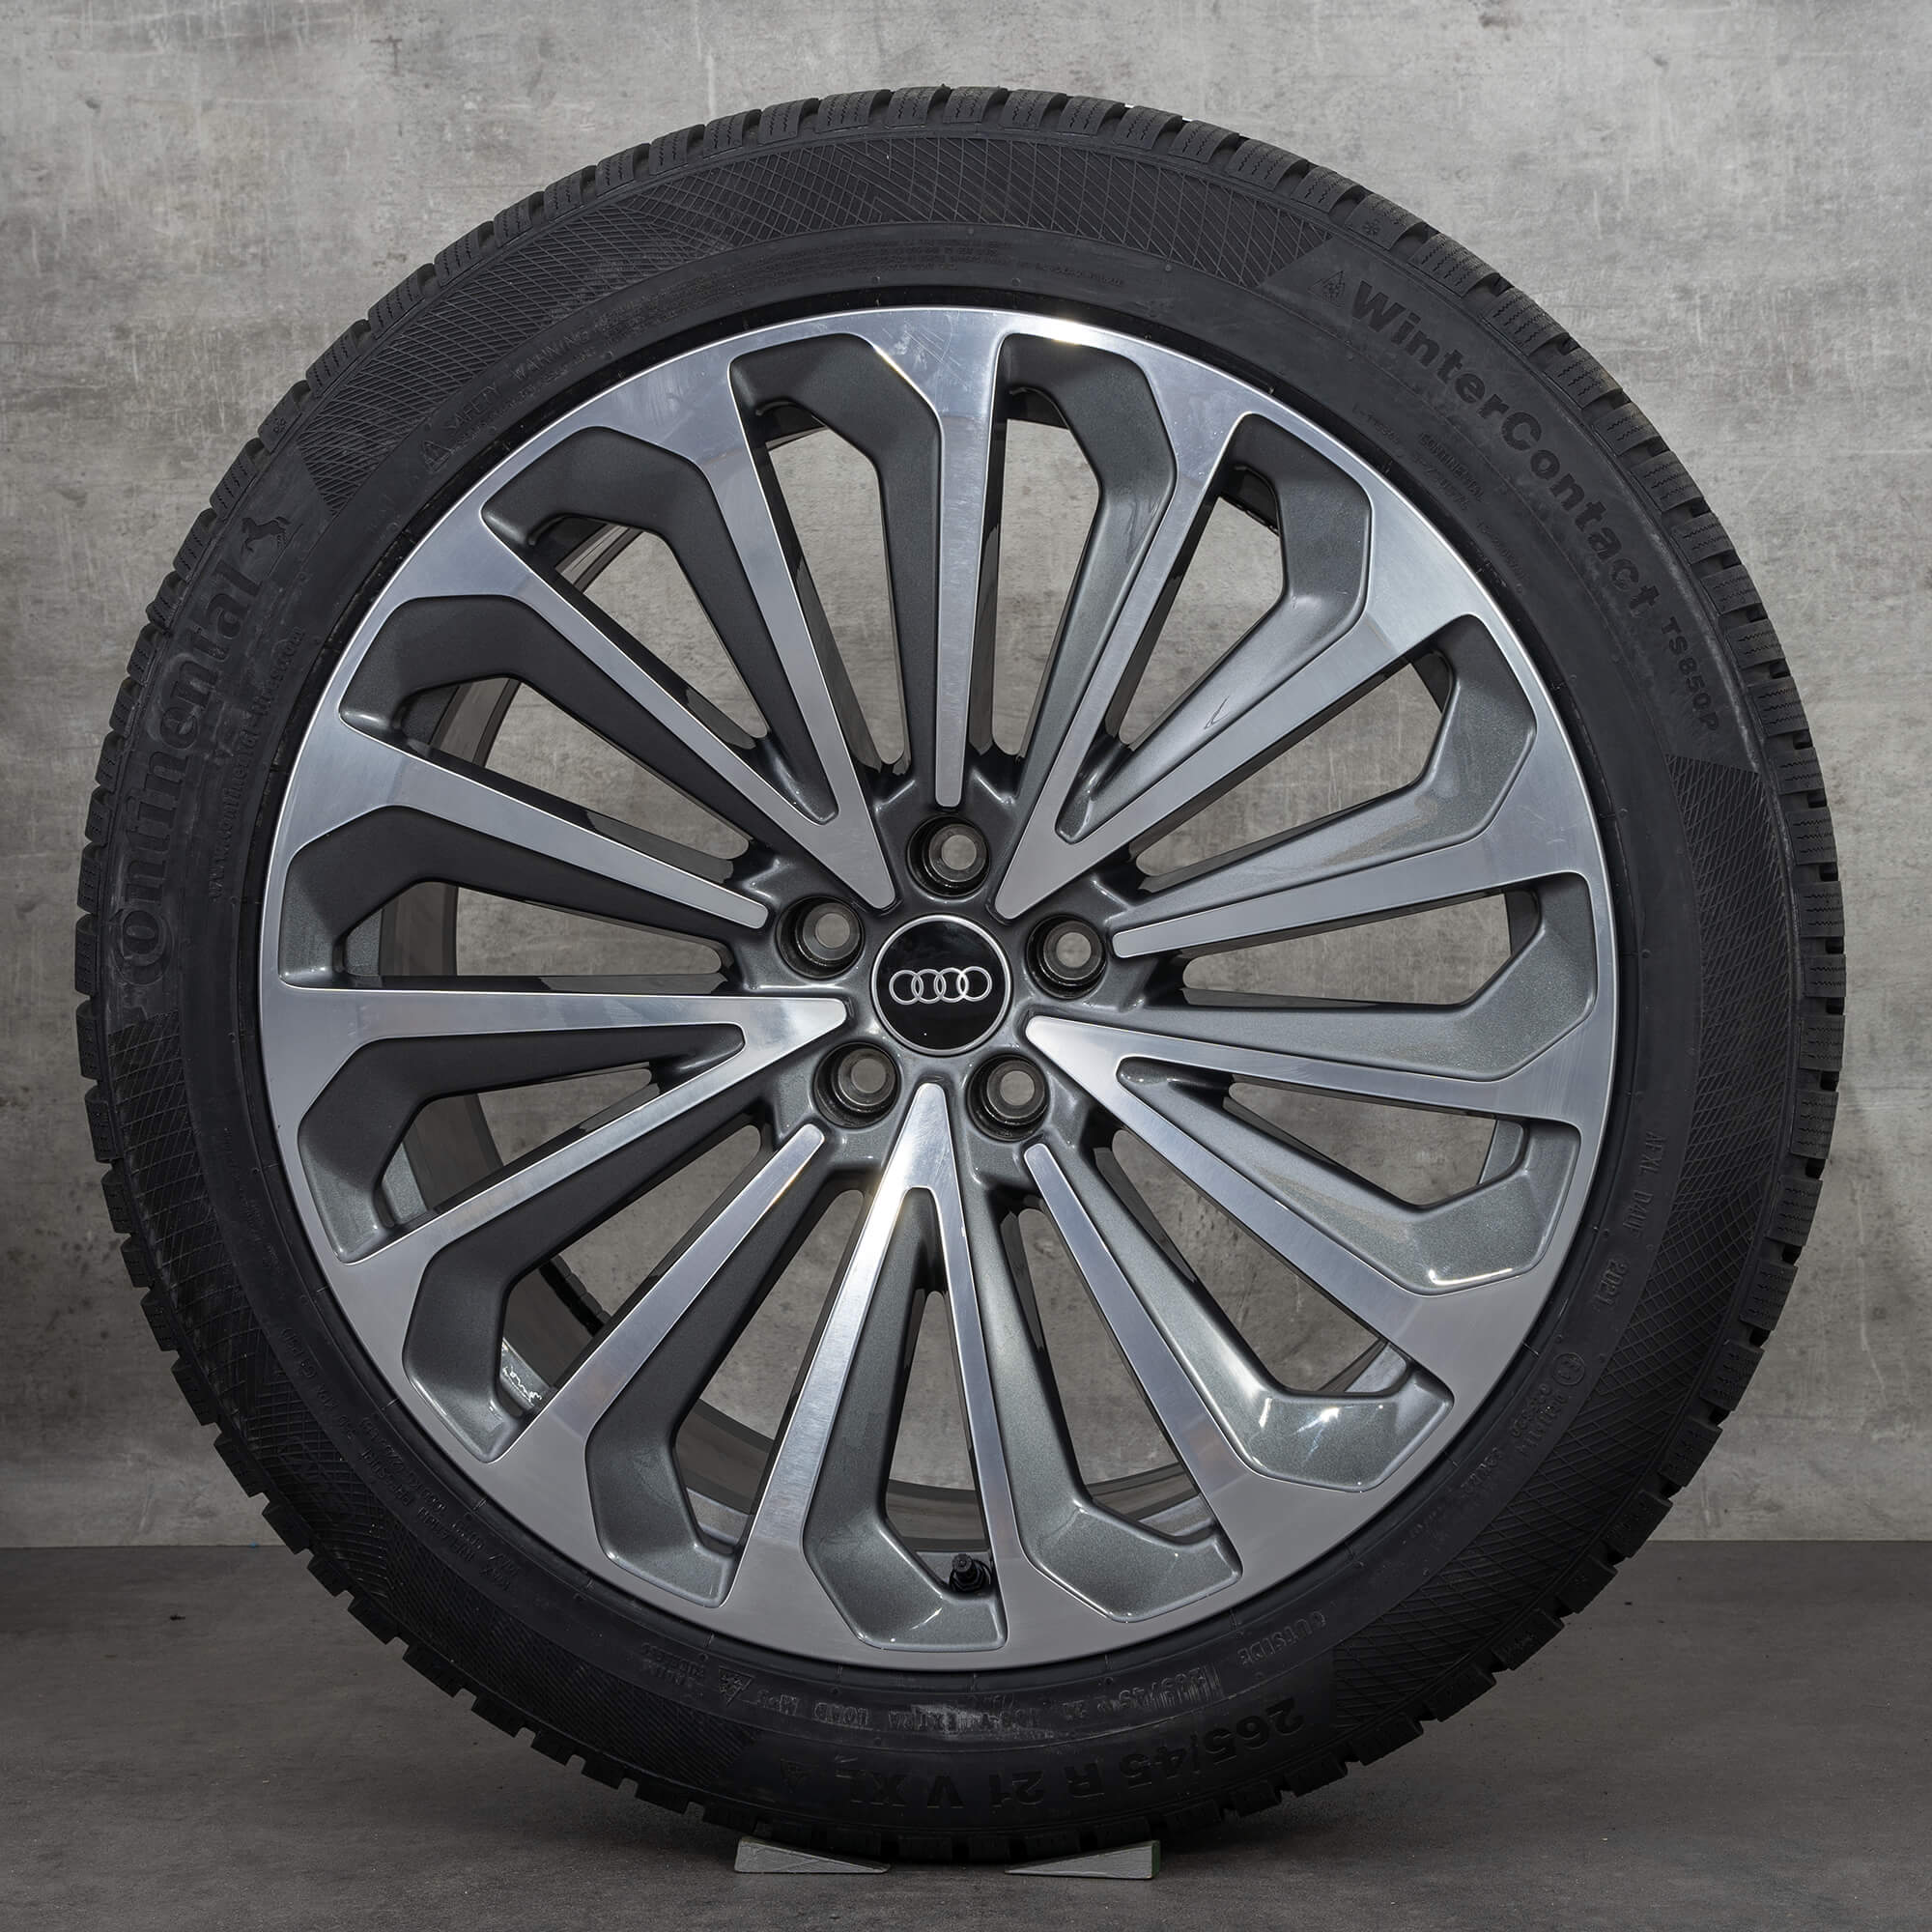 GE Audi vinterdäck 21 fälgar alloyfälgar tums e-tron vinterhjul 4KE